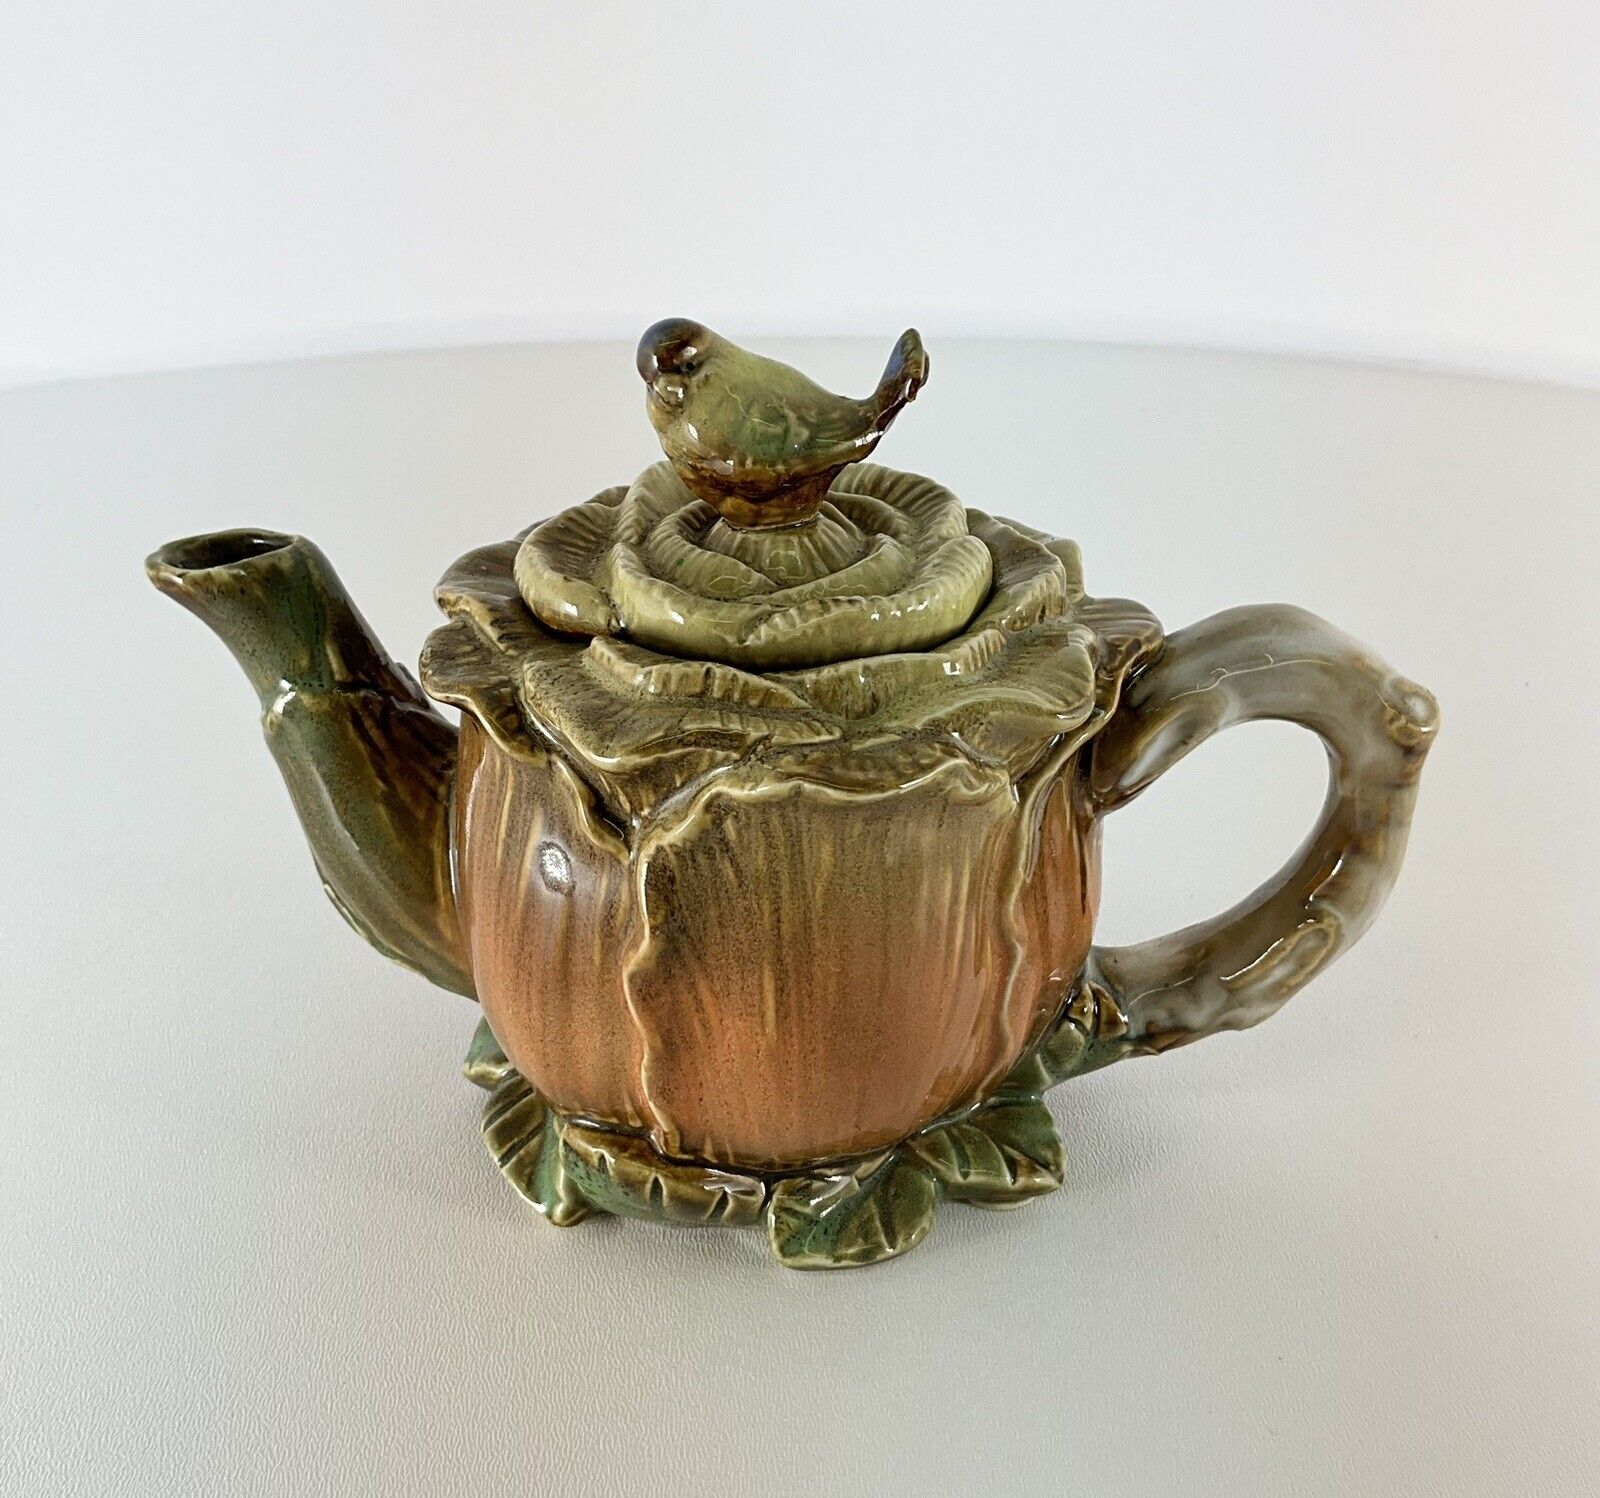 Ceramic Teapot Cabbage Rose With Resting Bird Finial Lid. Beautiful Teapot.